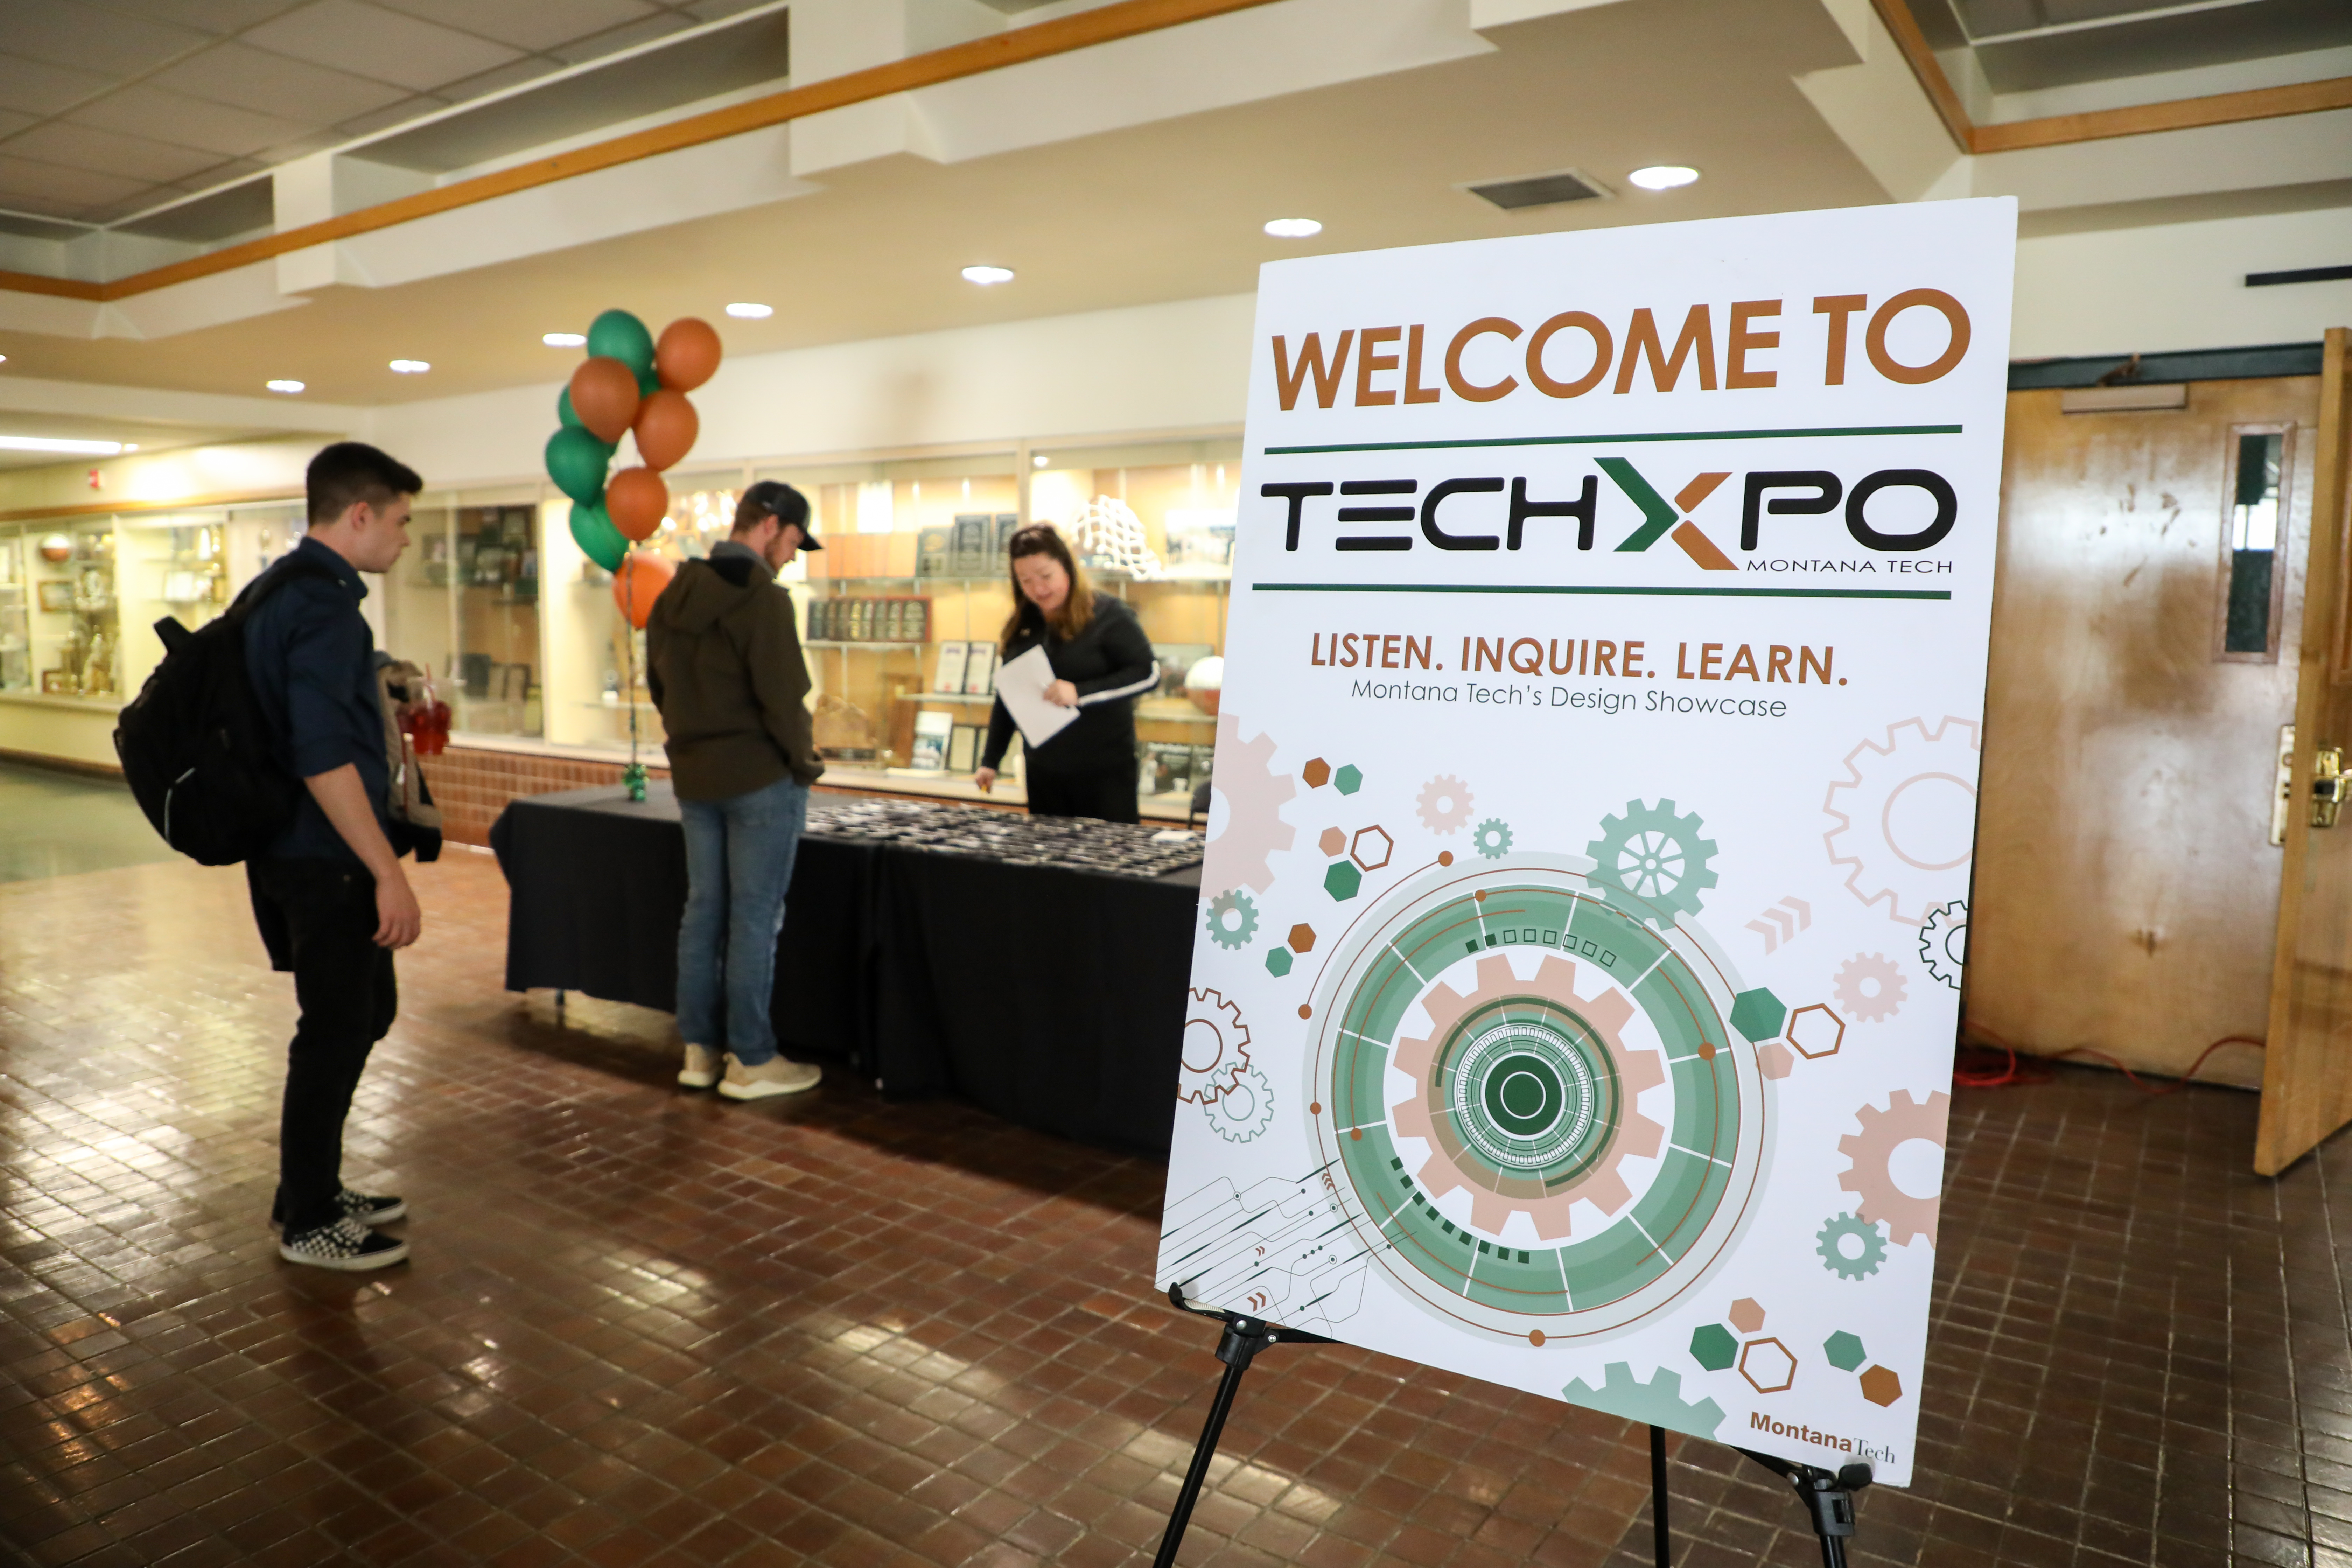 Techxpo greeting sign